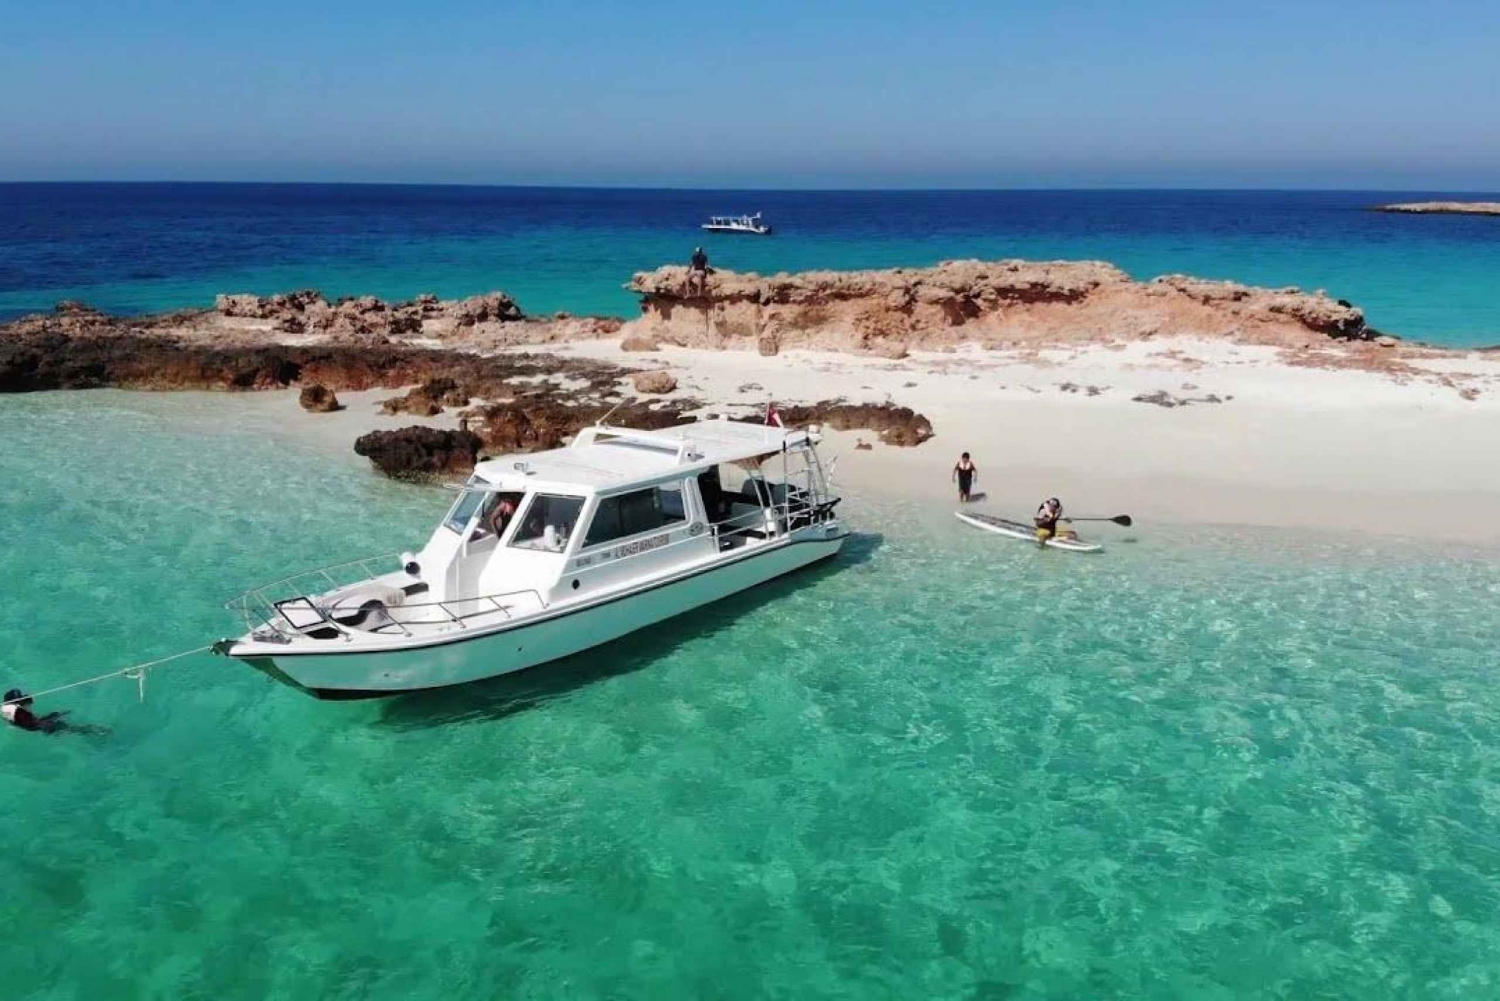 DIMANIYAT ISLAND Discover snorkel paradise in Muscat